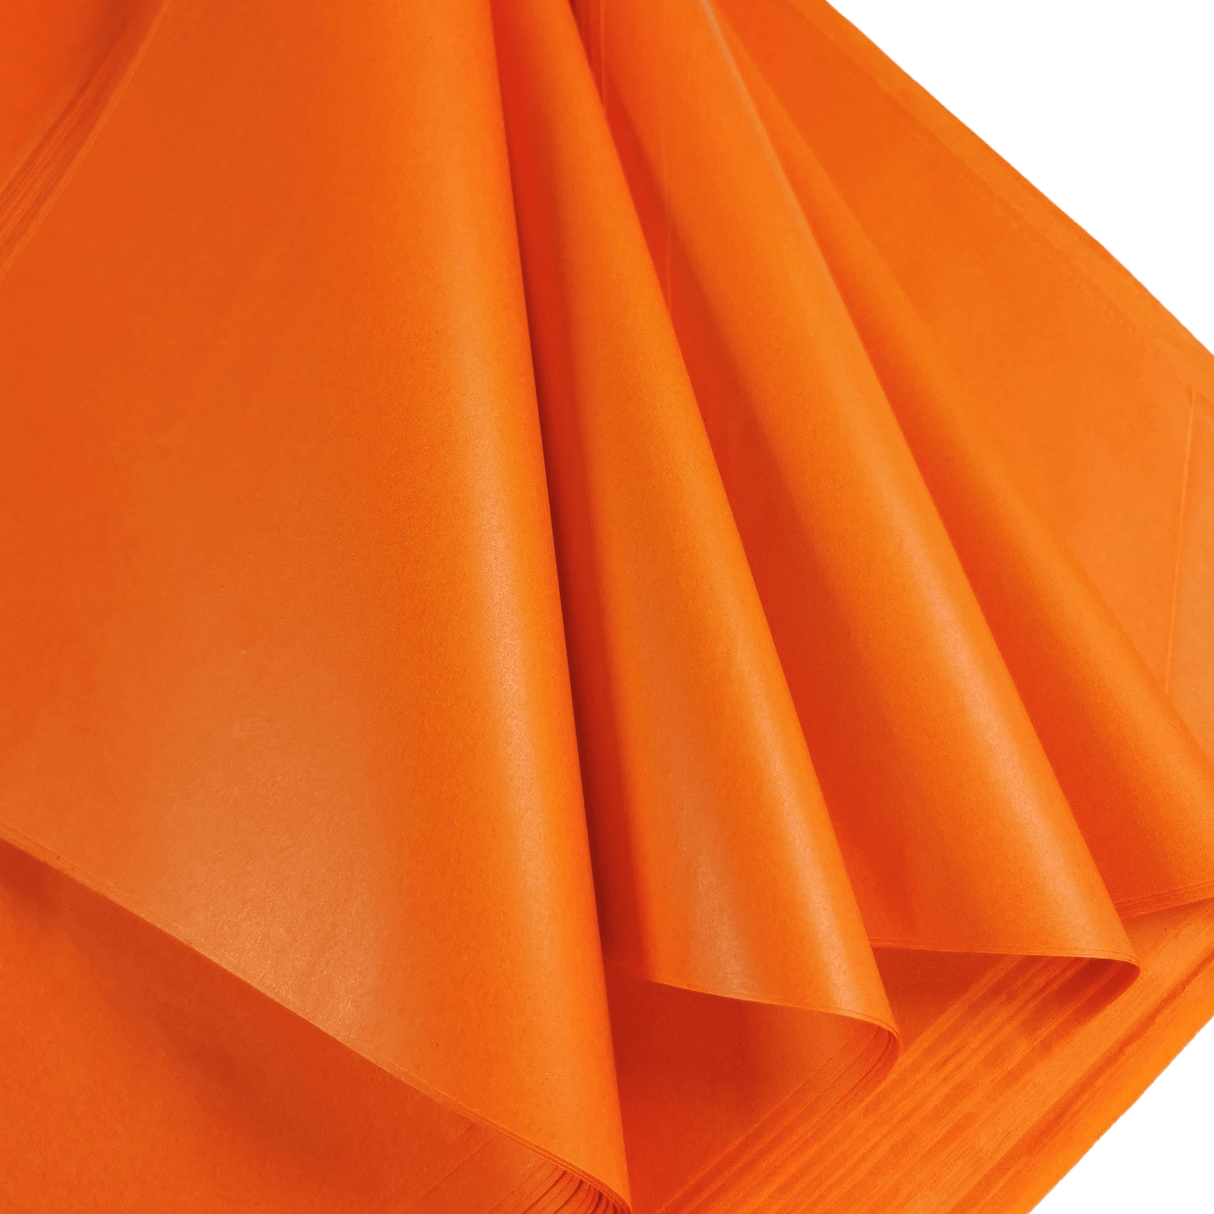 Orange Tissue Paper Folds 1